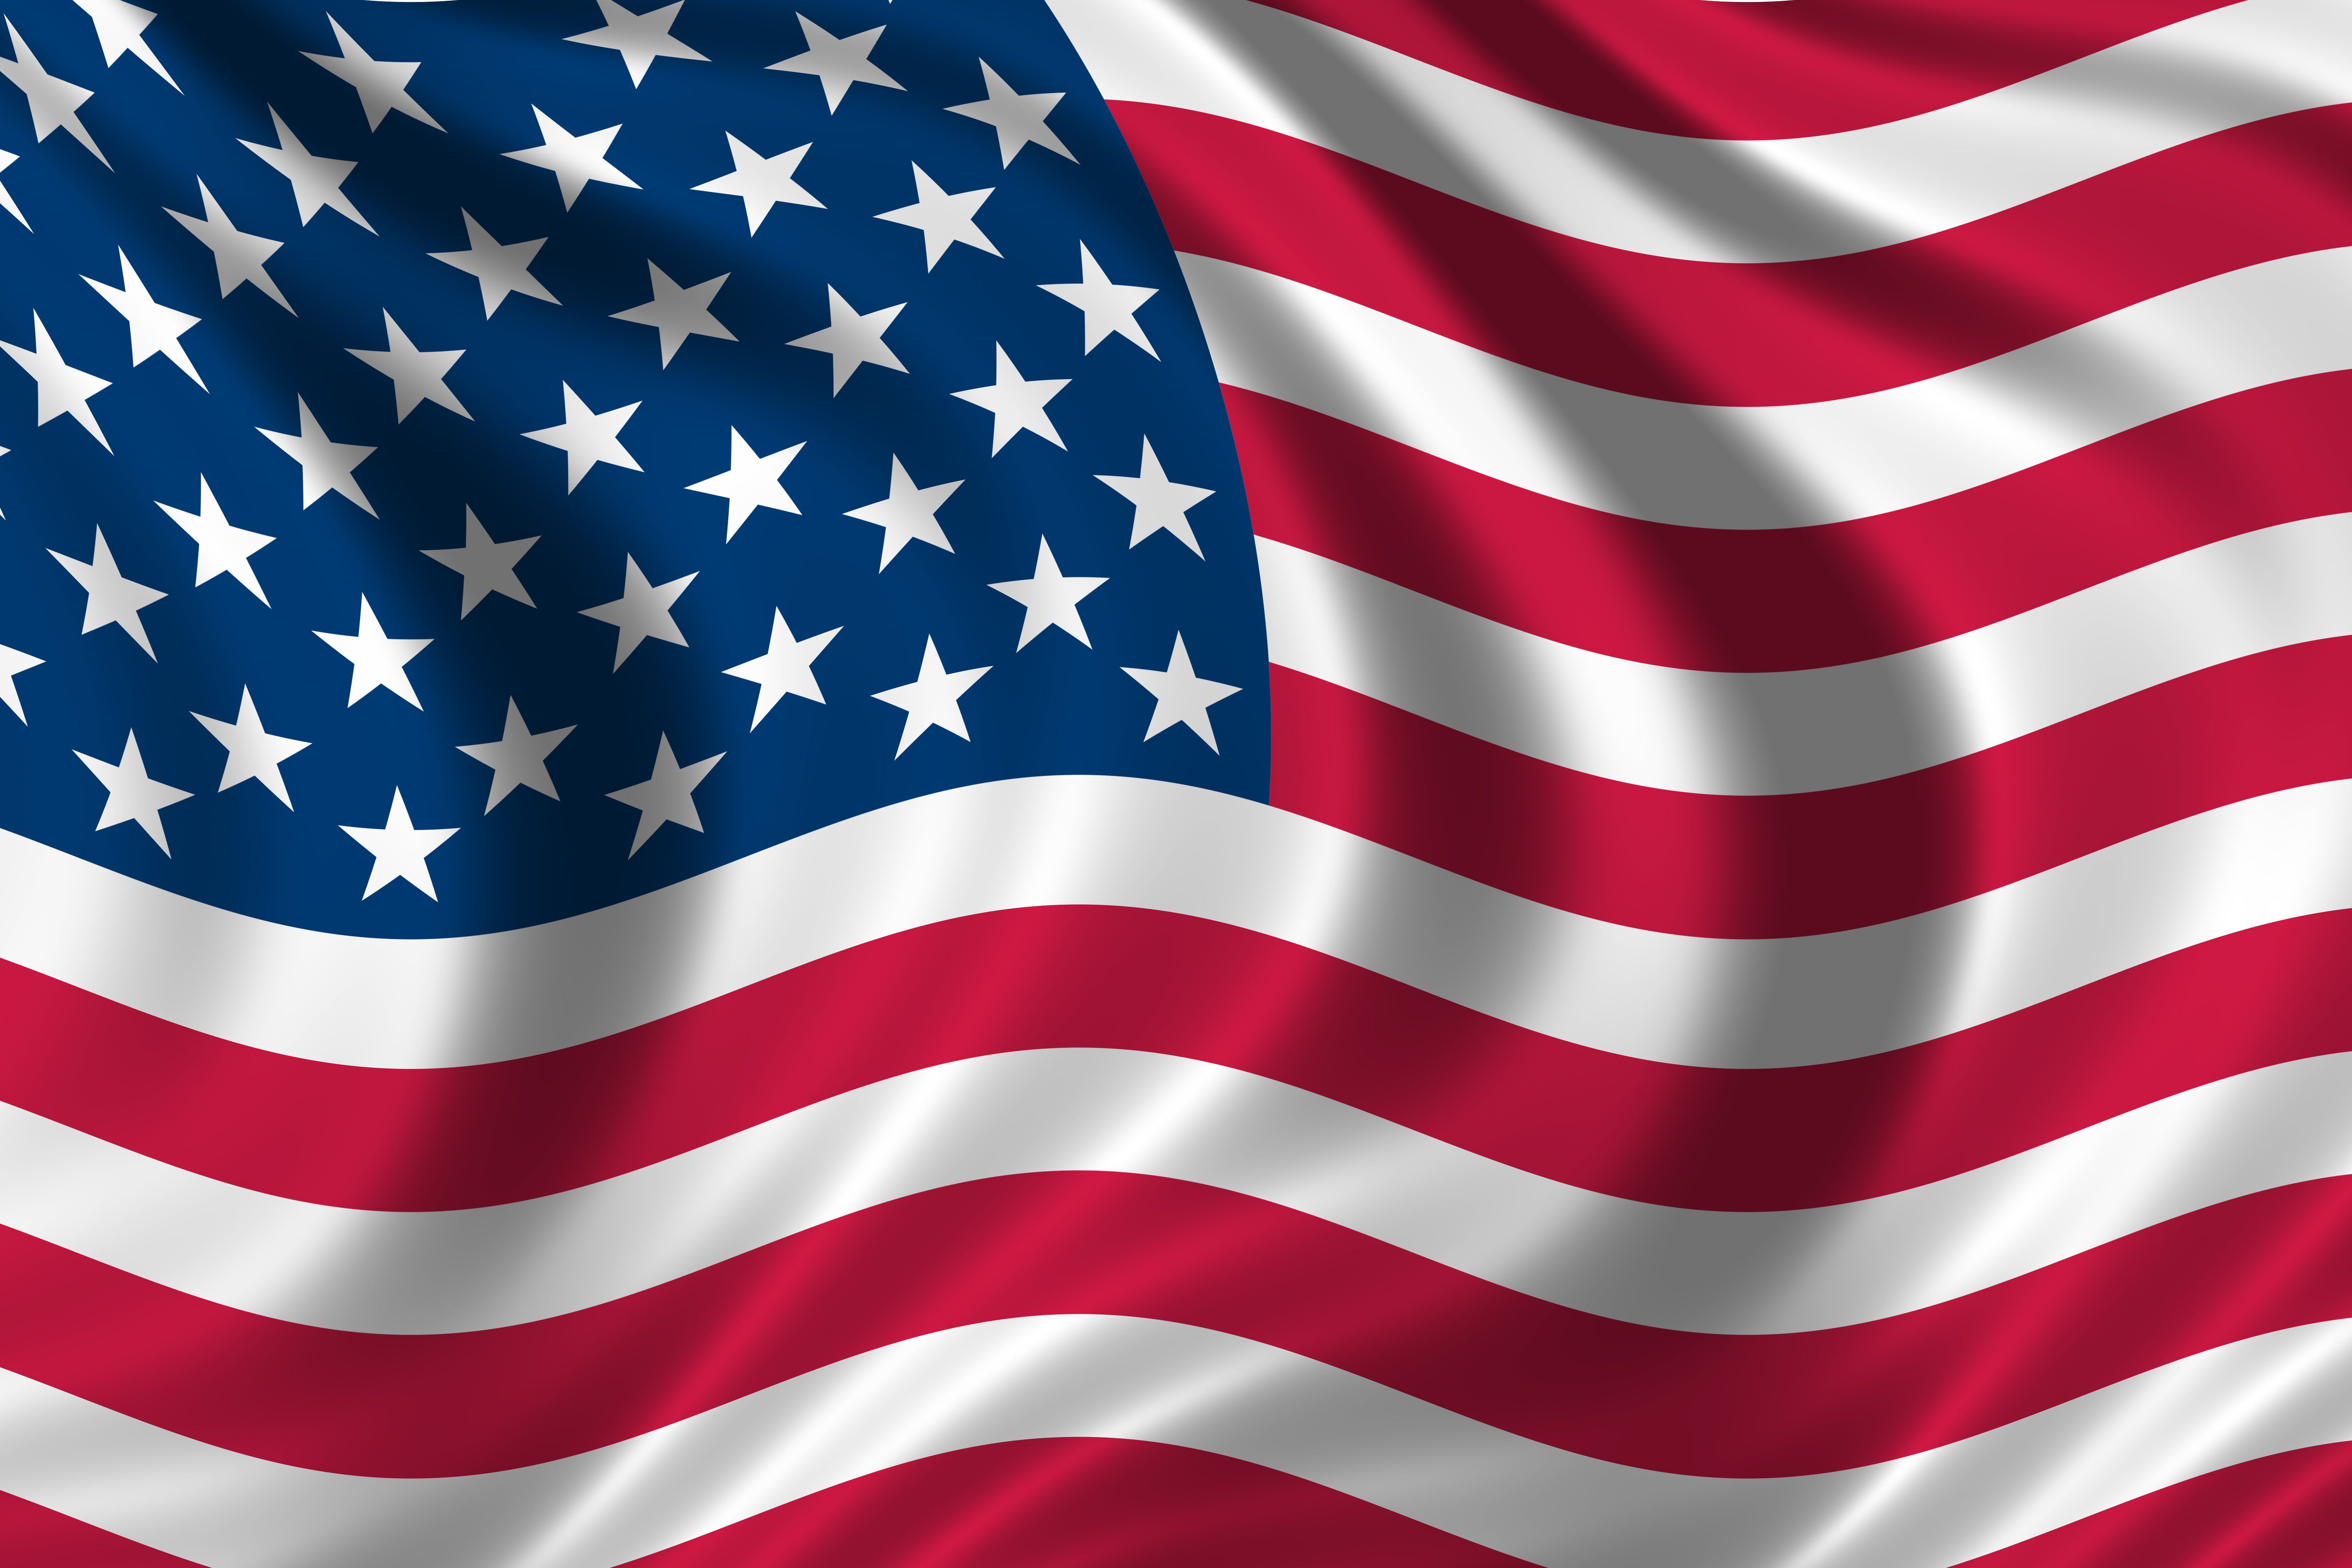 5 usa. Флаг США. Флаг Соединенных Штатов Америки. Флаг Соединённых Штатов Америки. Американский флаг картинка.